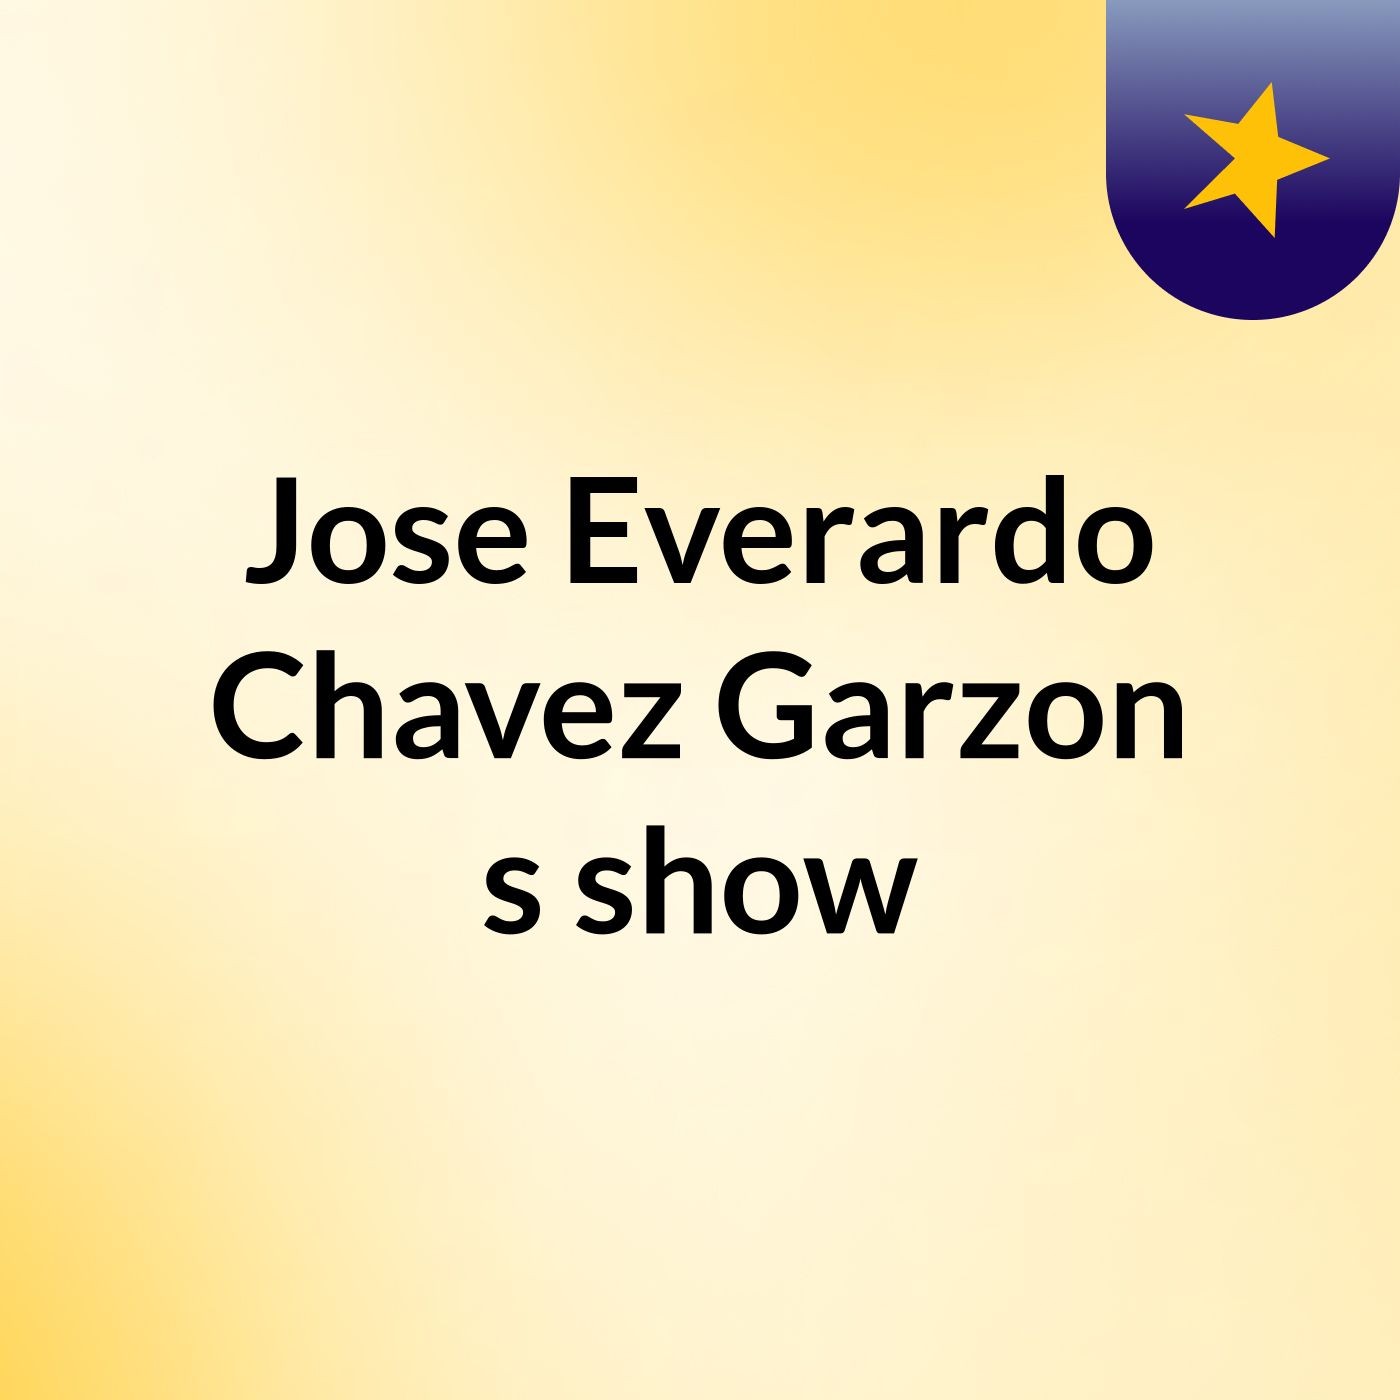 Jose Everardo Chavez Garzon's show